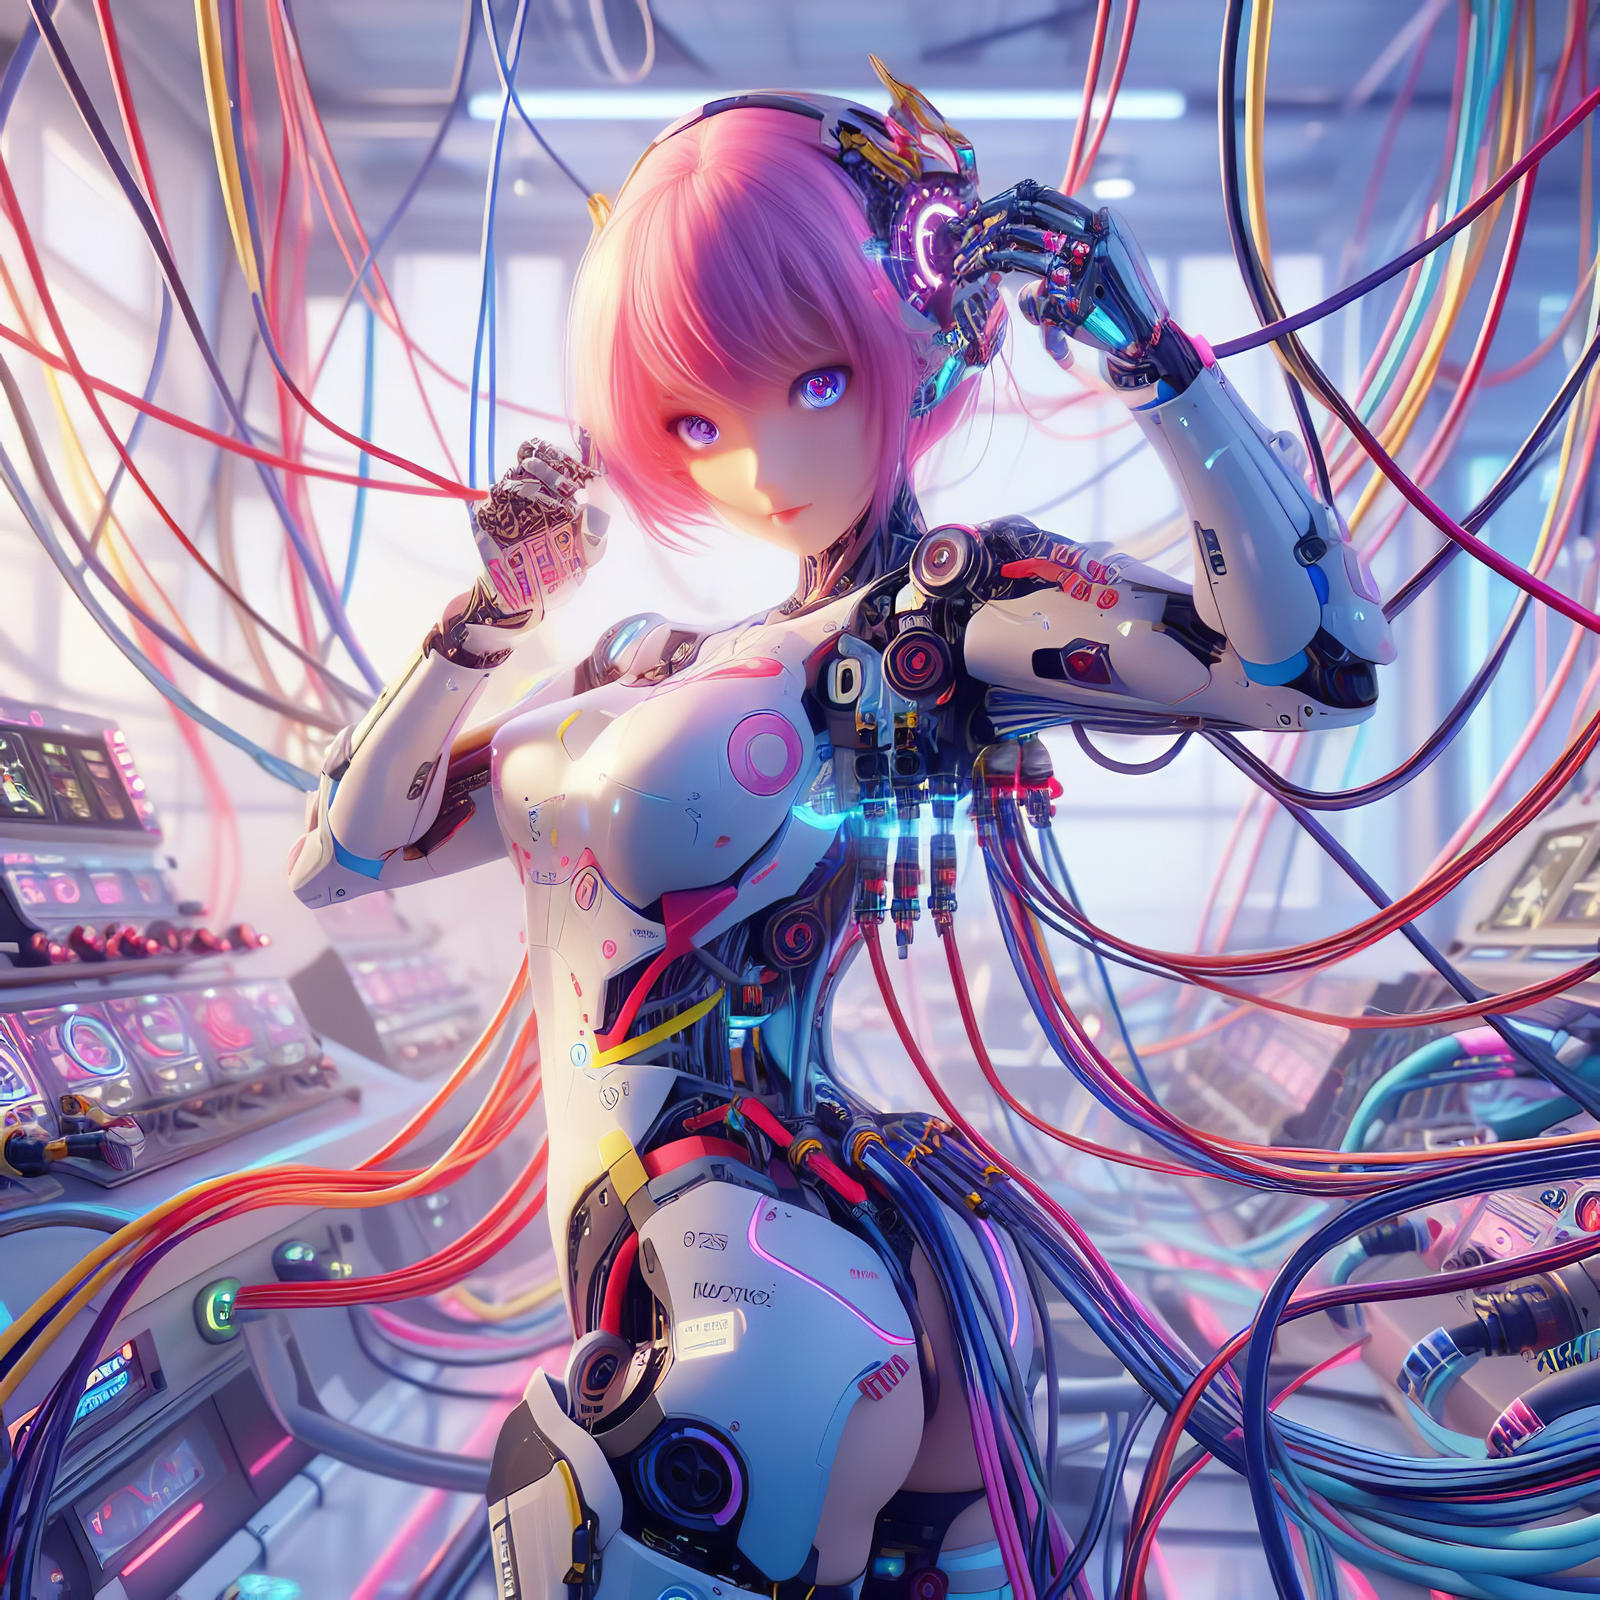 Cyberpunk Anime Girl by MAXADIN on DeviantArt